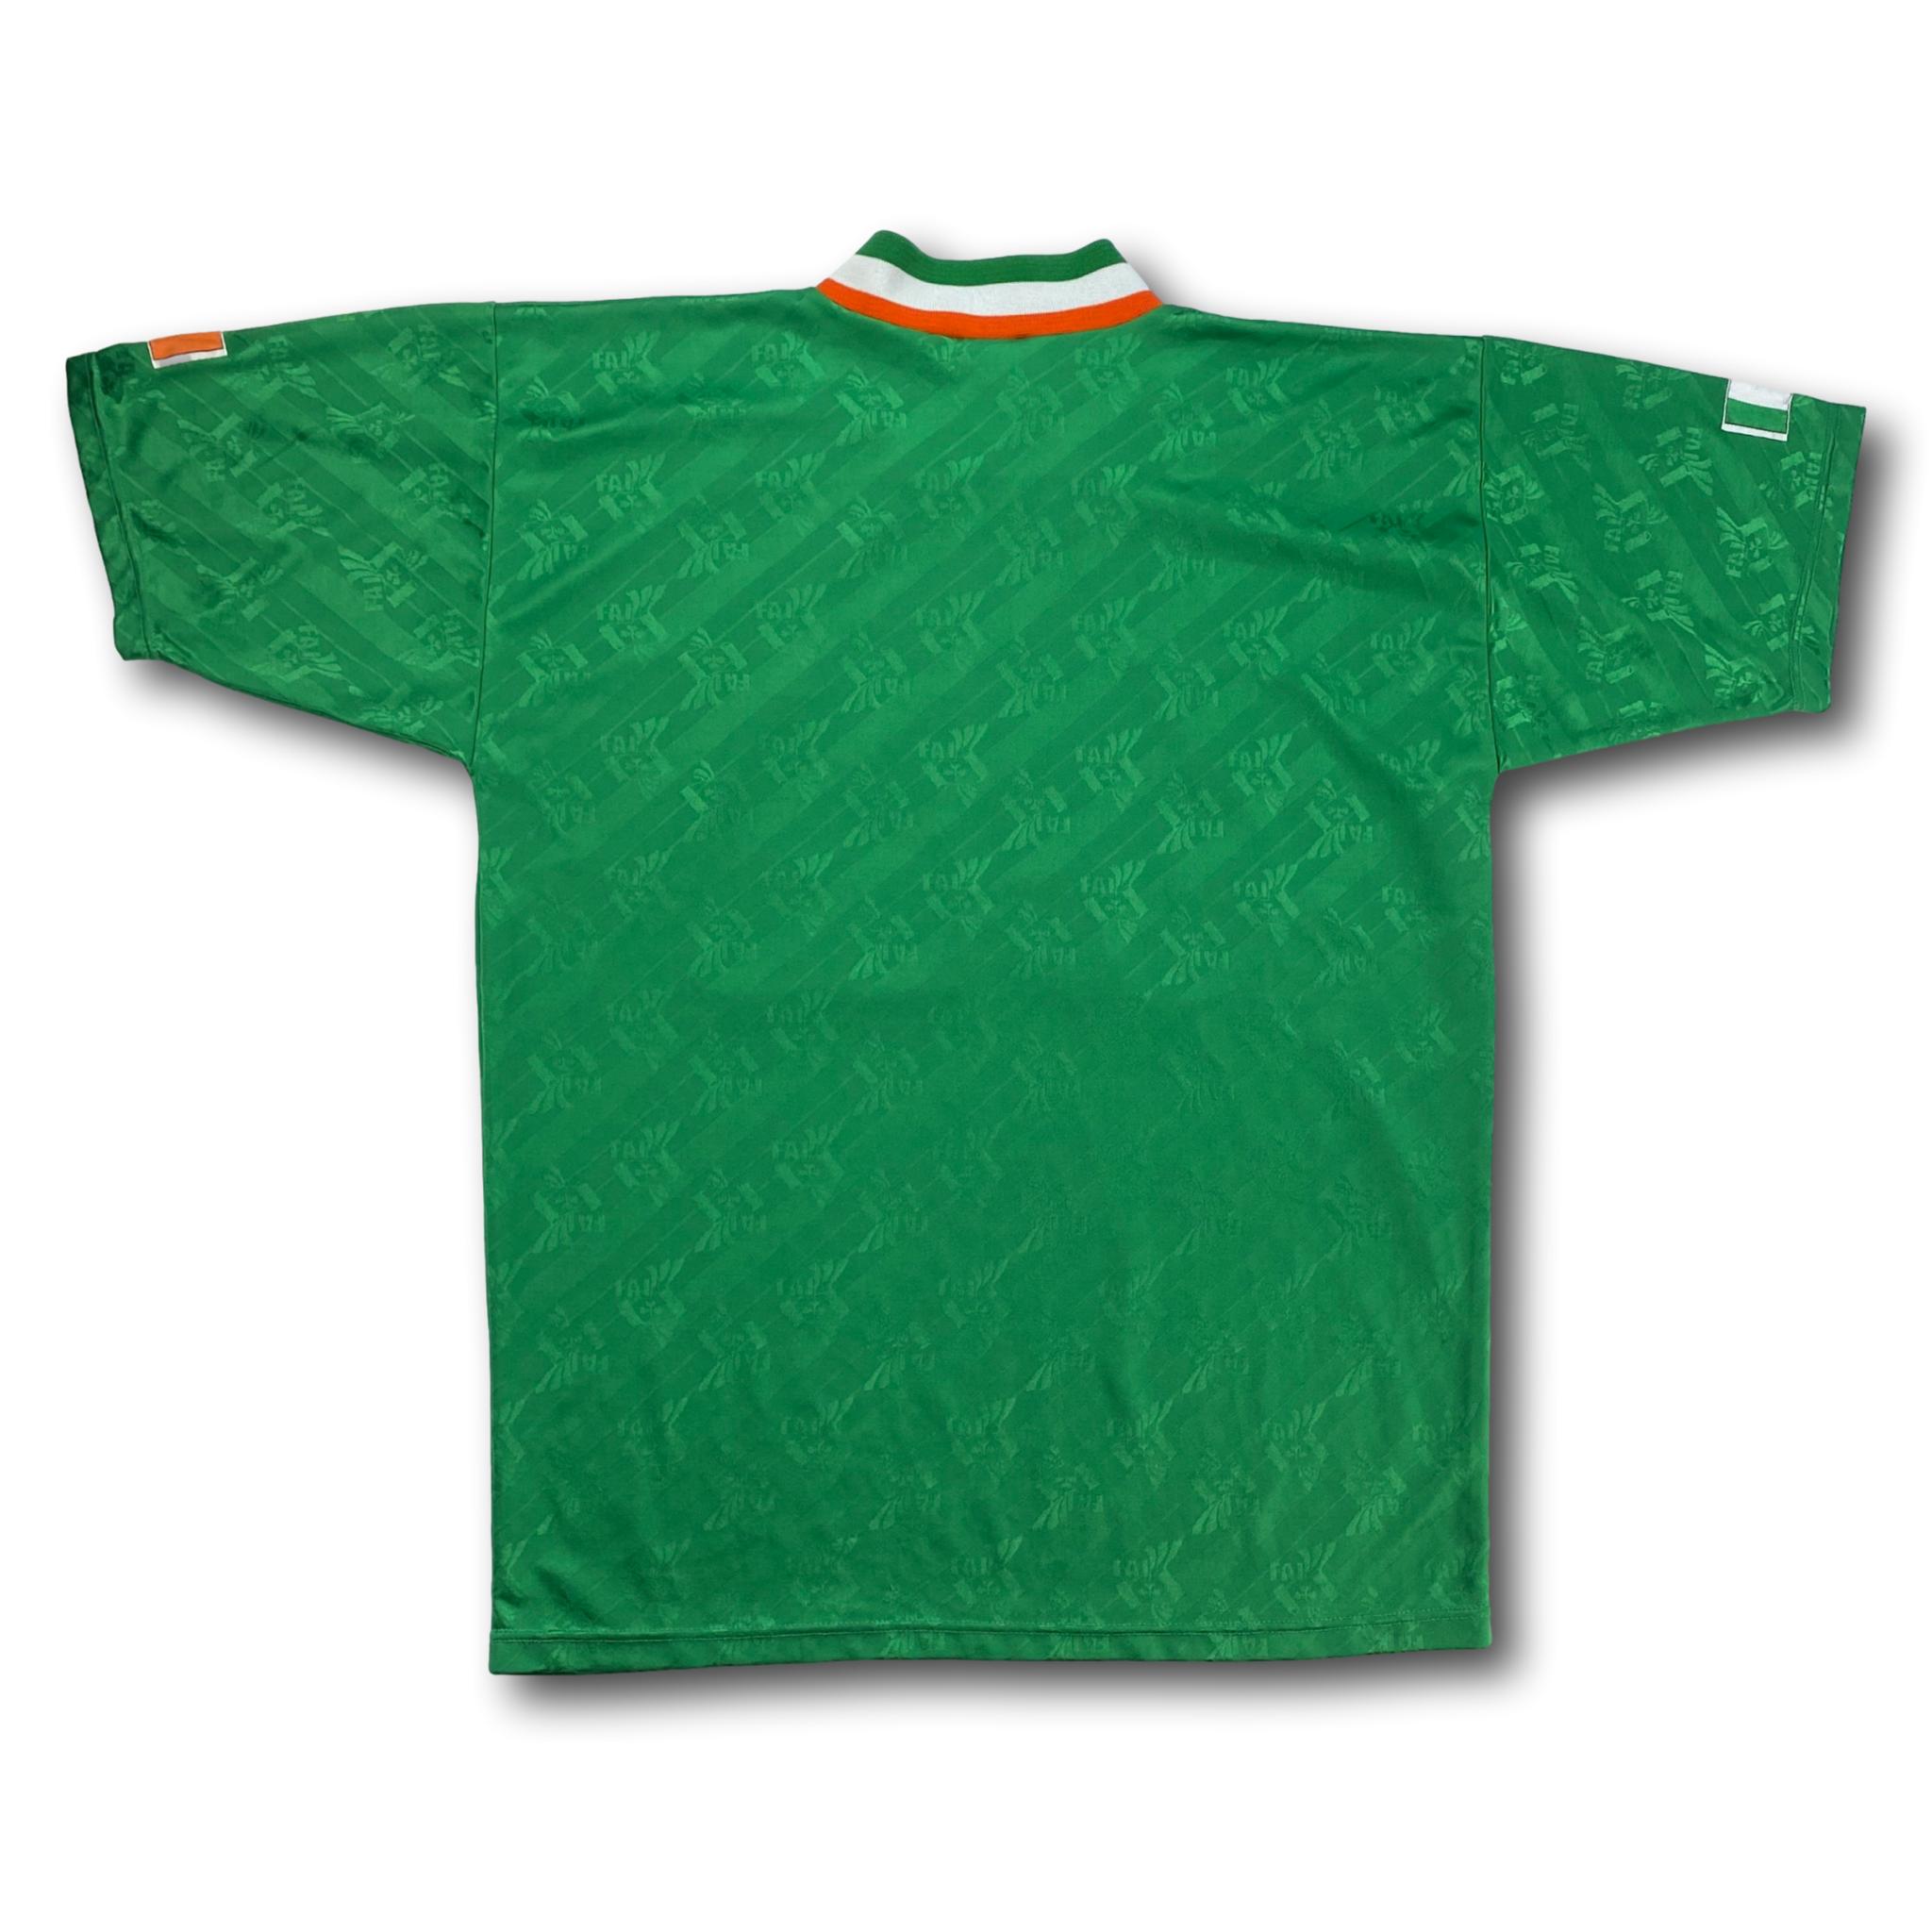 Irland 1994-95 Heim XL adidas